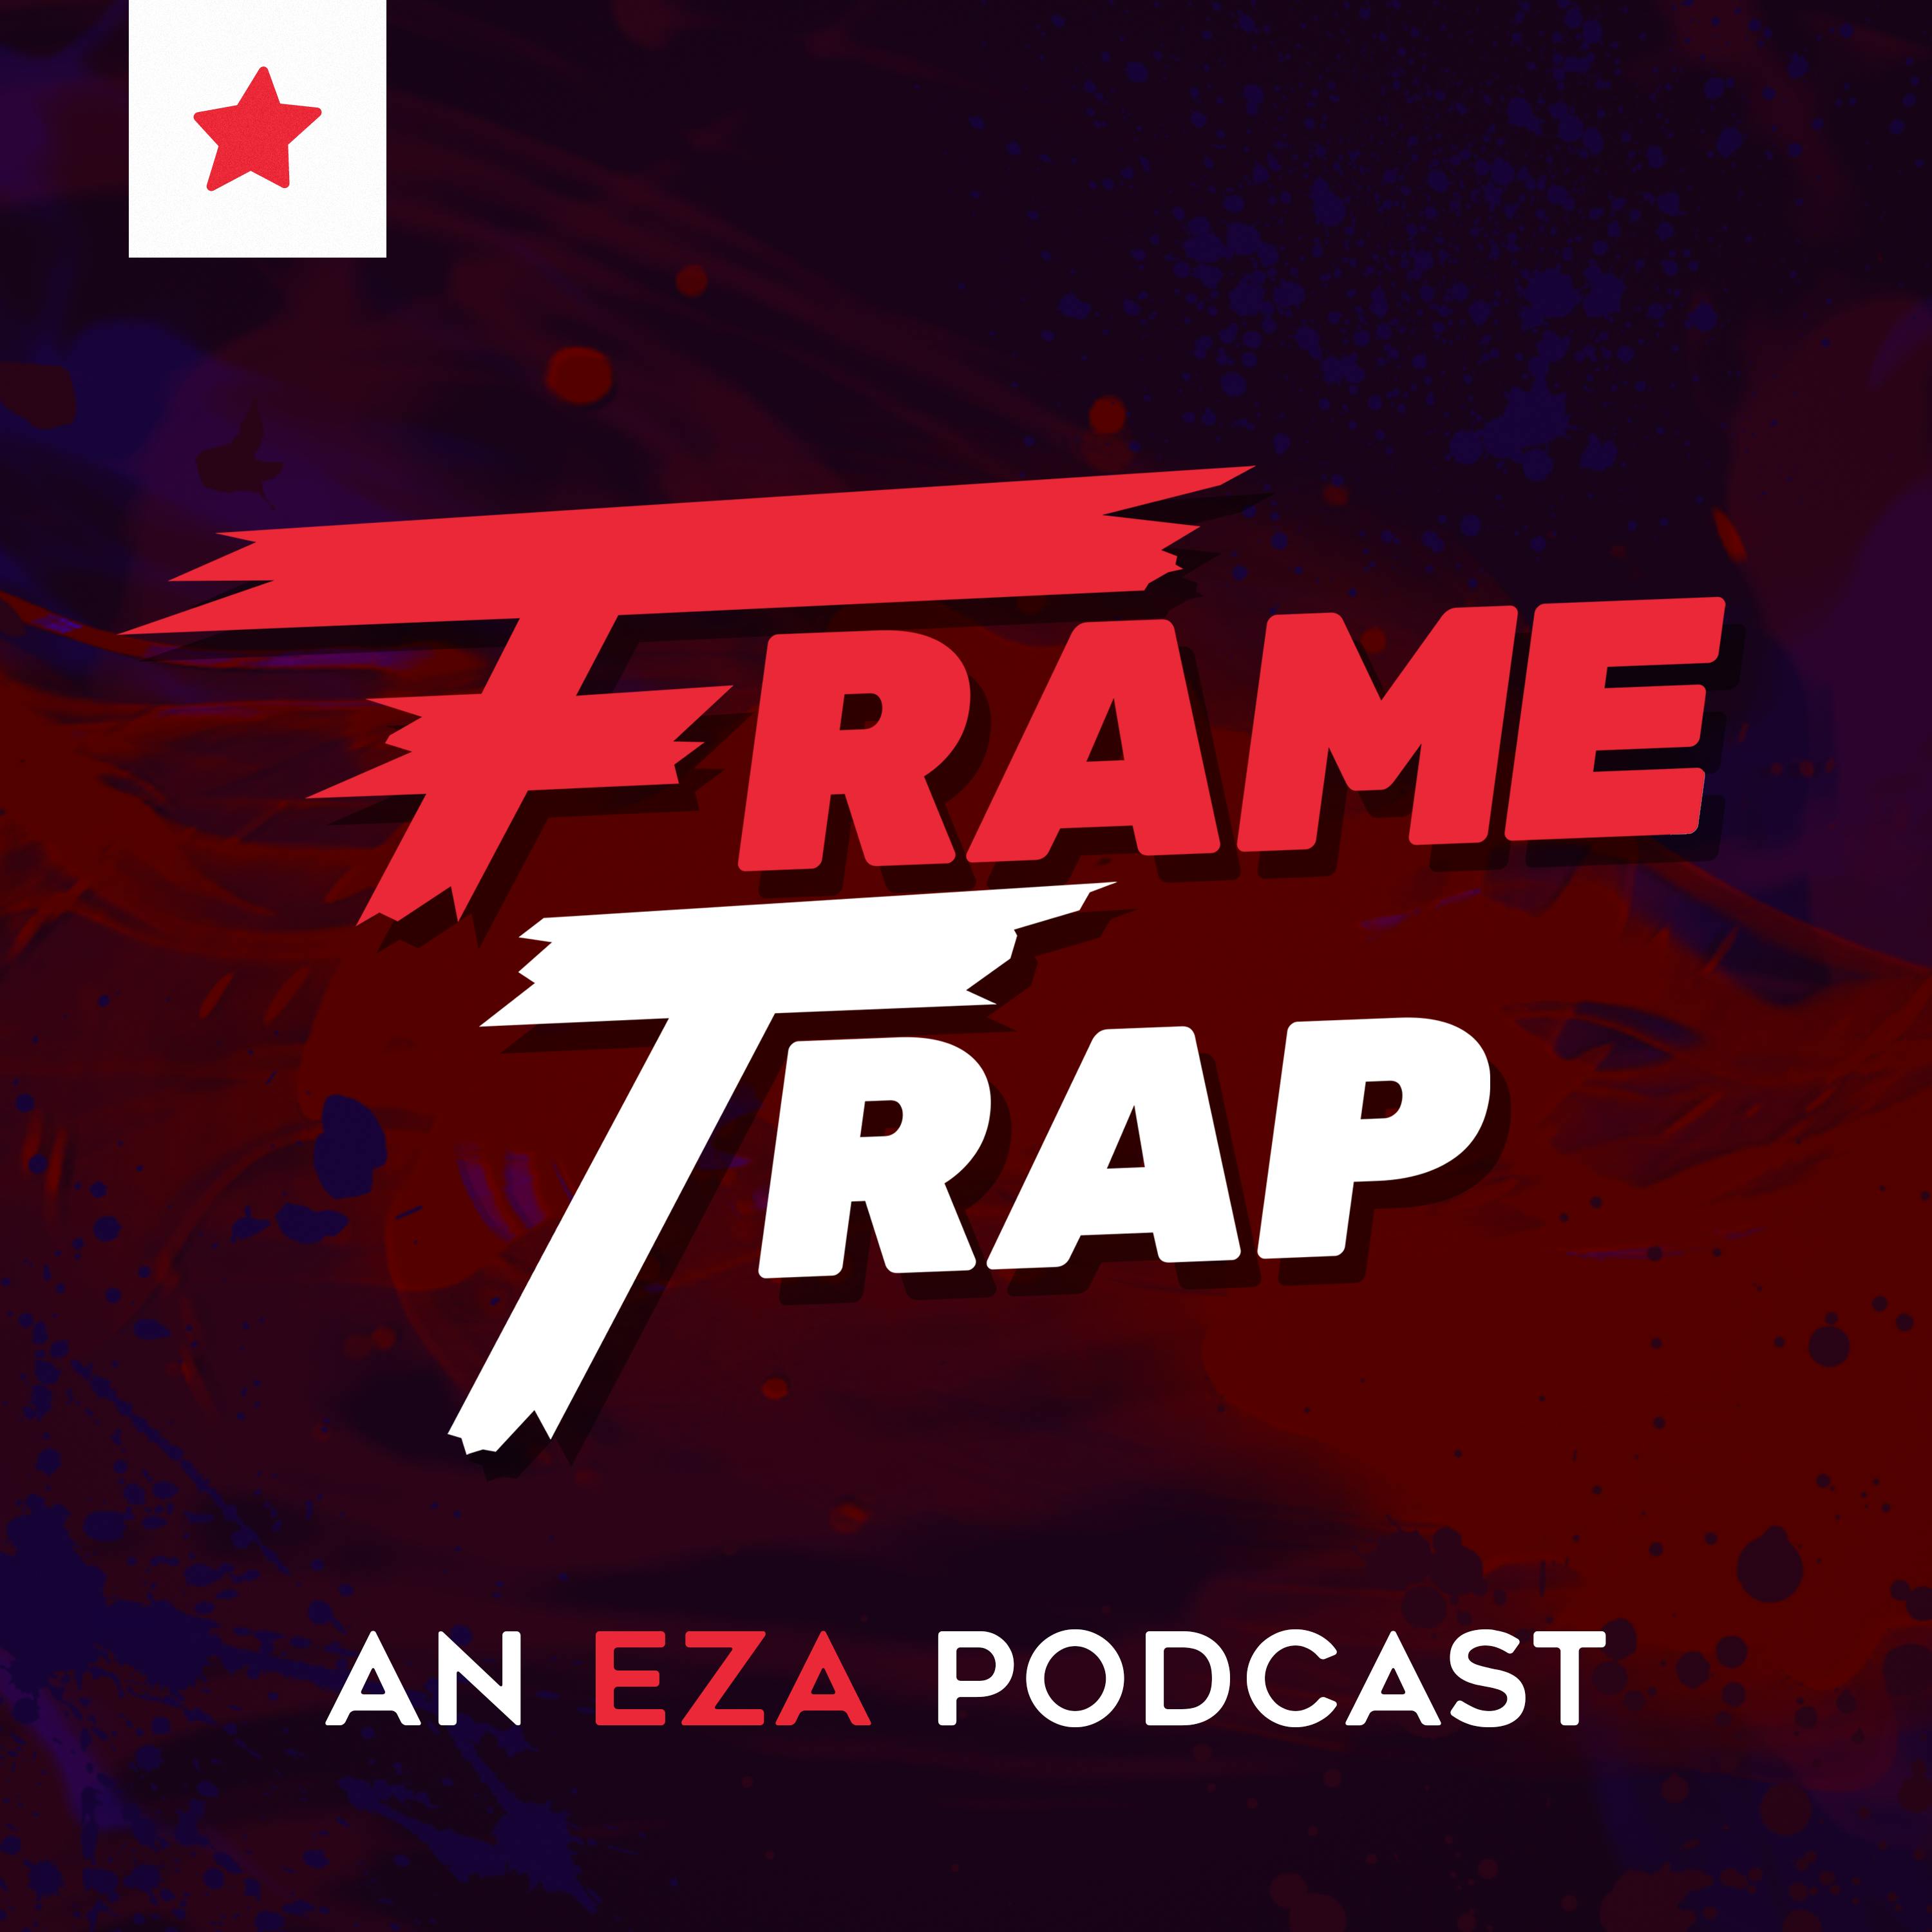 Frame Trap - Episode 171 